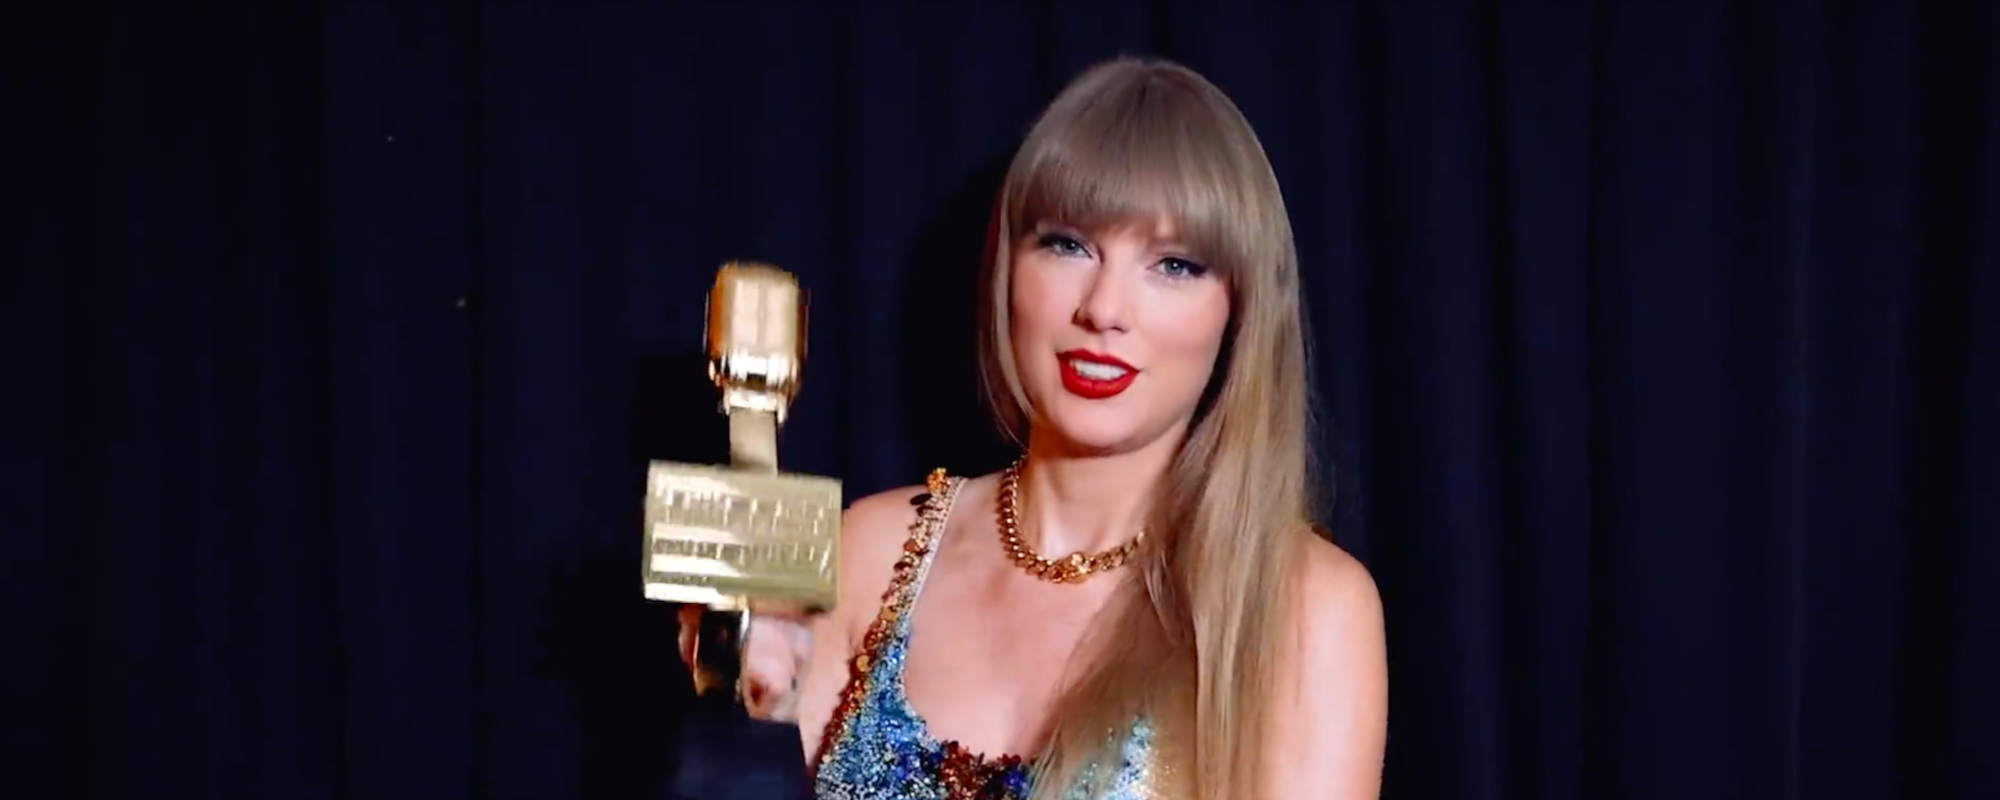 Taylor Swift Wins Big at Billboard Music Awards, Taking Home 10 Trophies